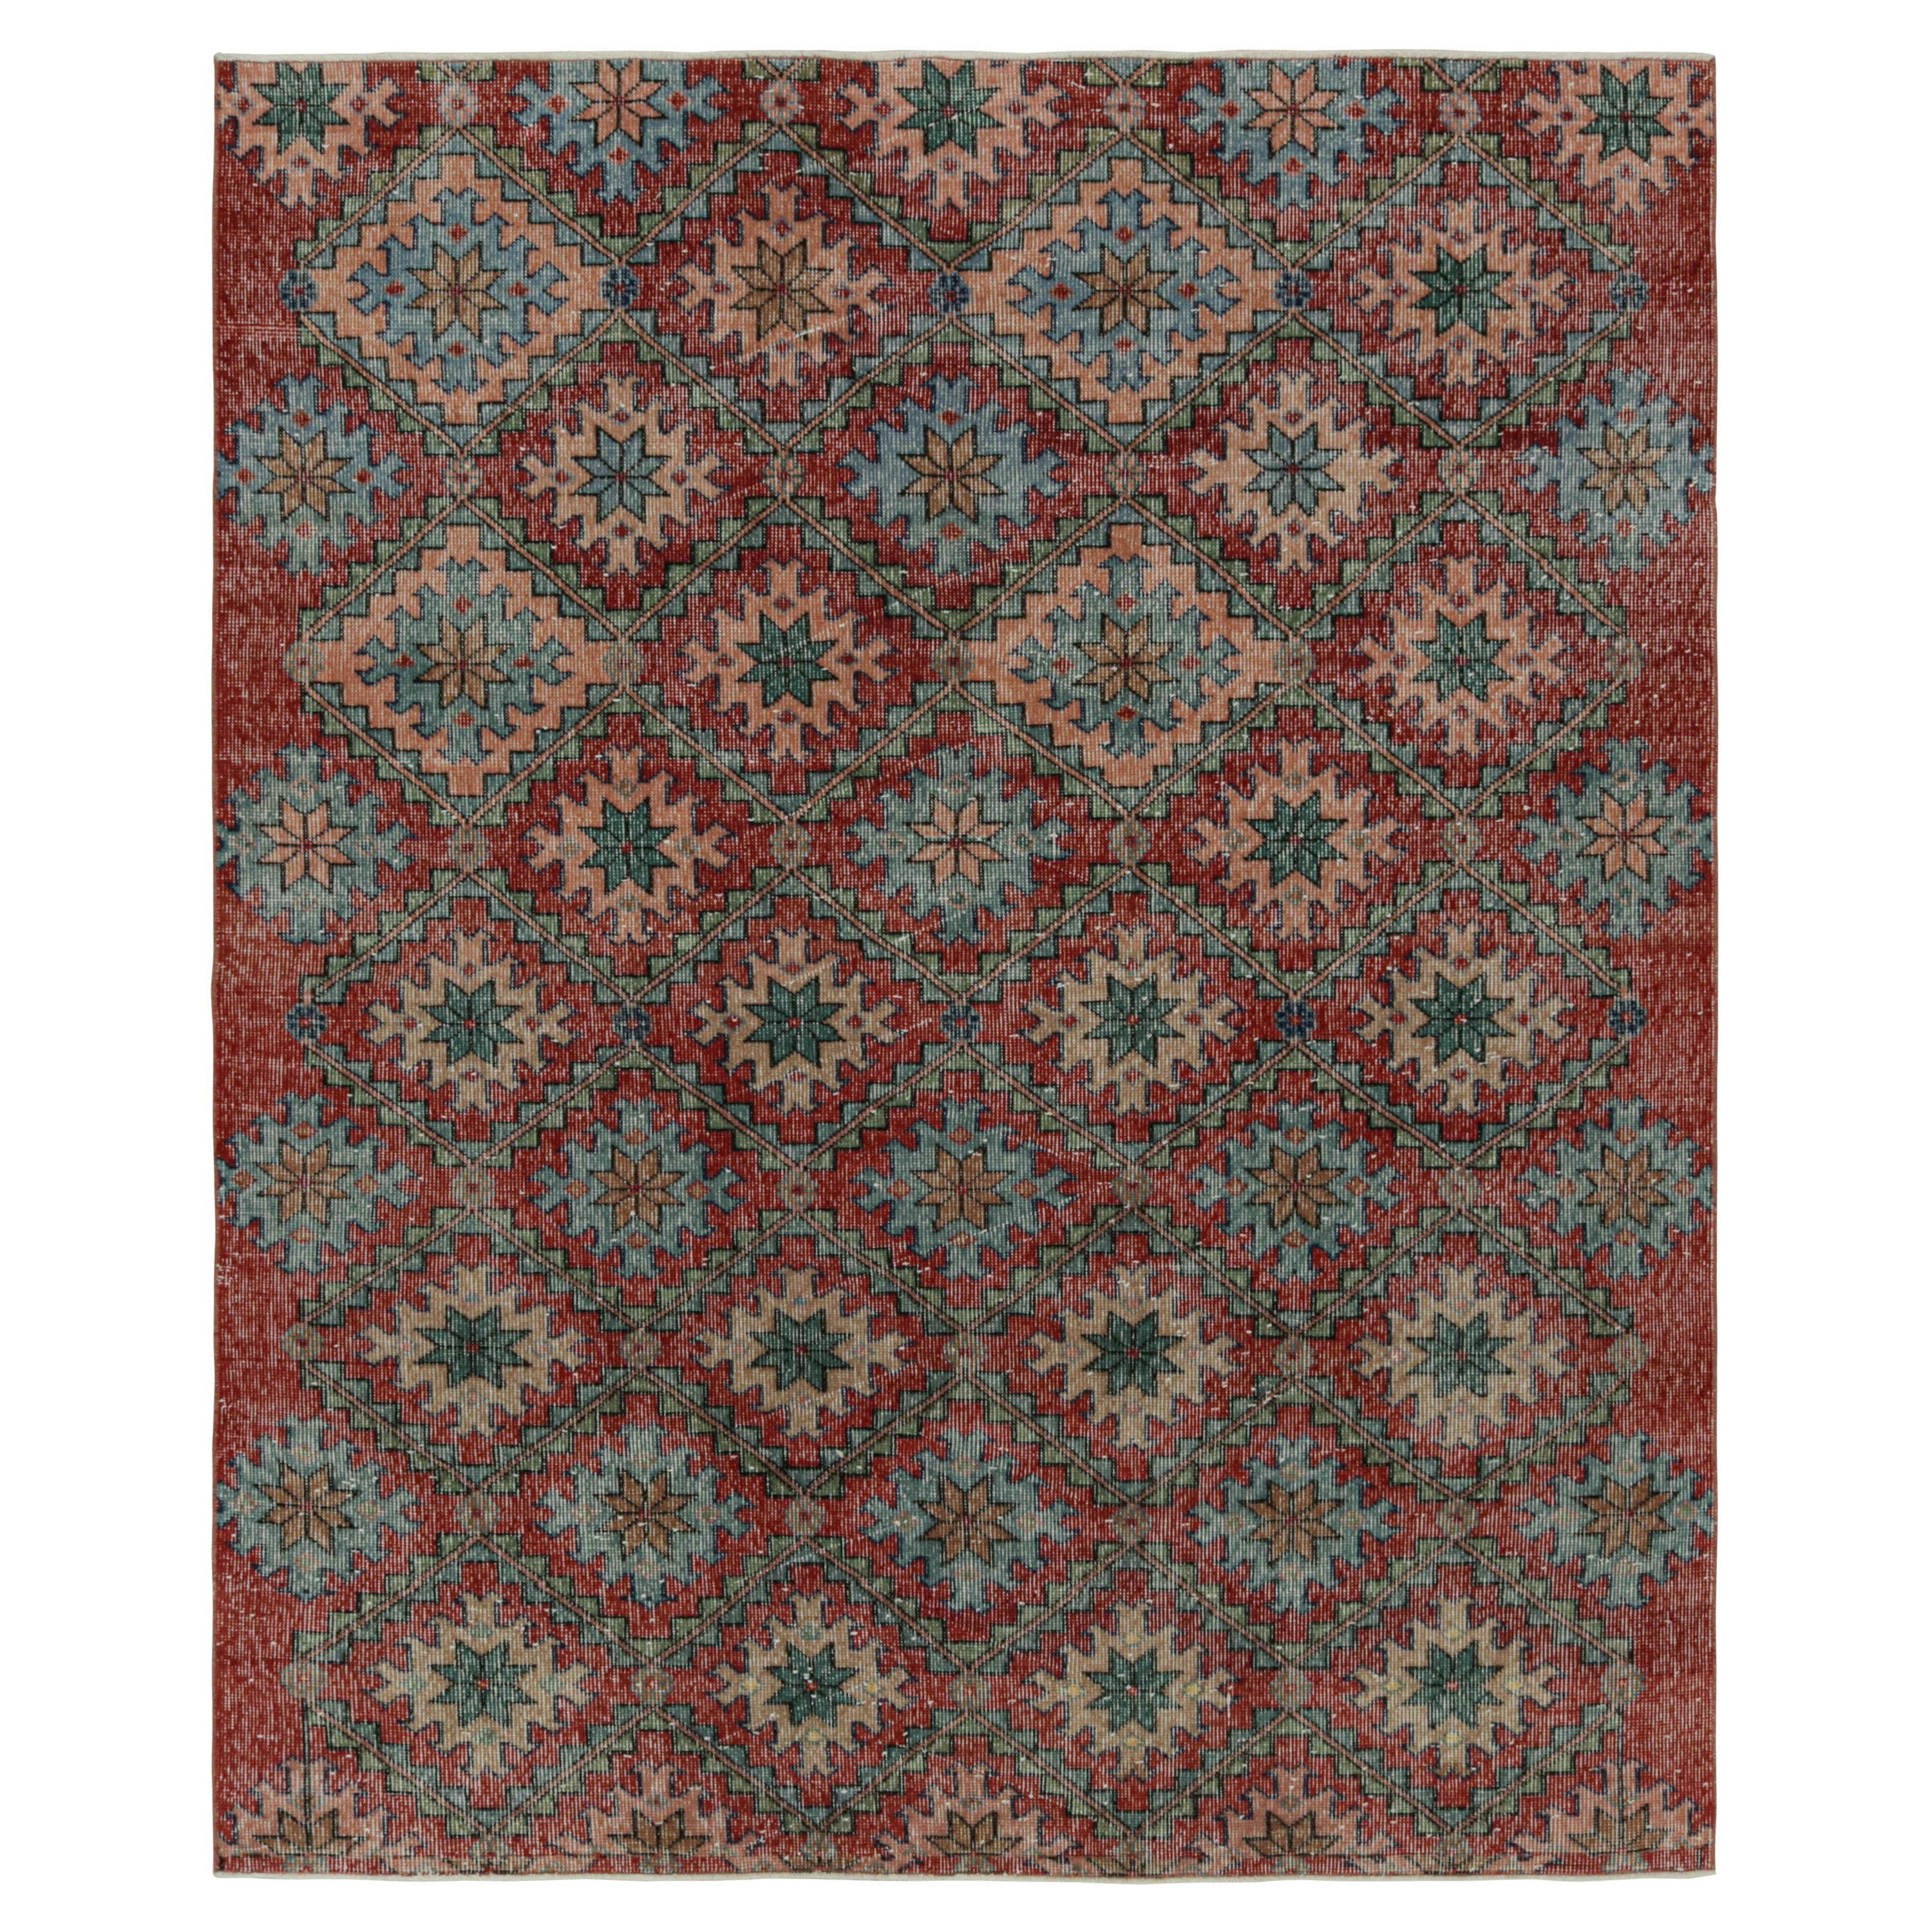 Vintage Zeki Müren Rug in Burgundy with Geometric Patterns, from Rug & Kilim 